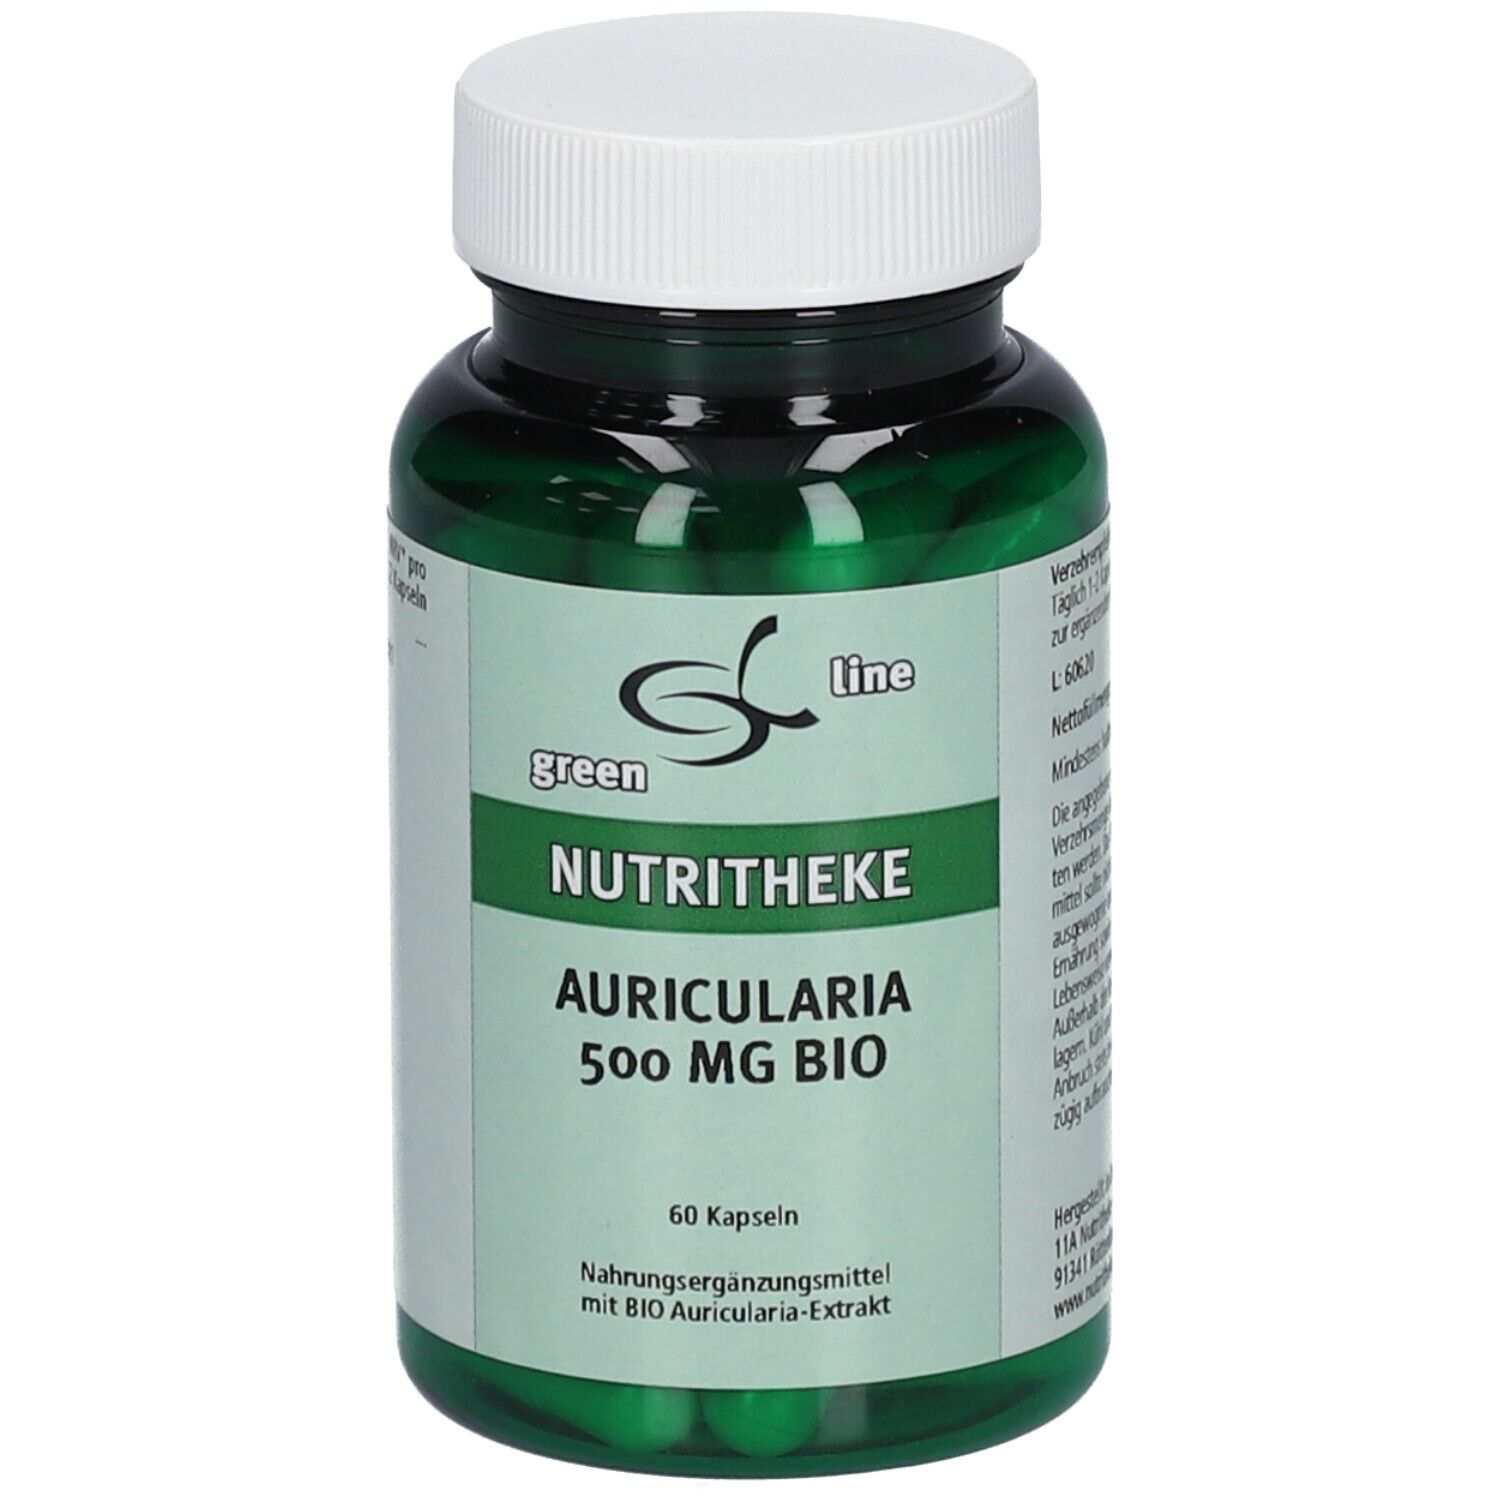 11 A Nutritheke GmbH green line Auricularia 500 mg BIO